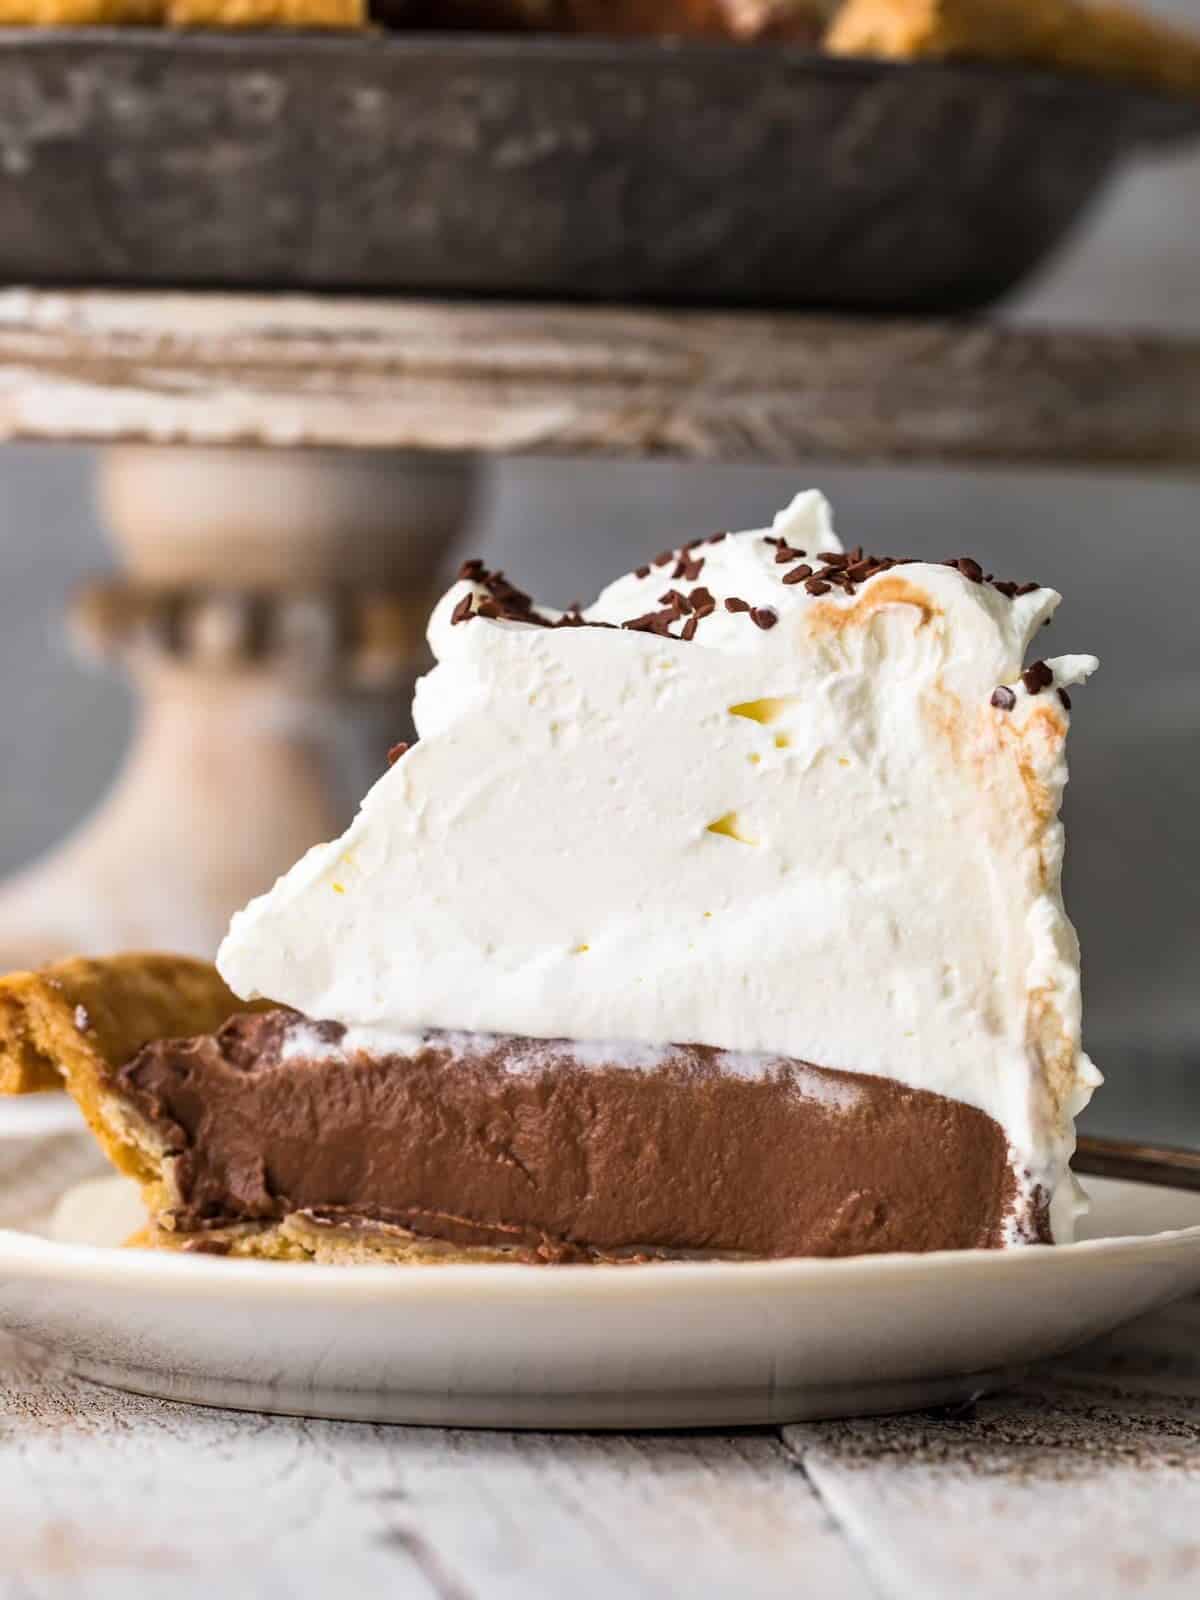 Best slice of chocolate cream pie on a plate.